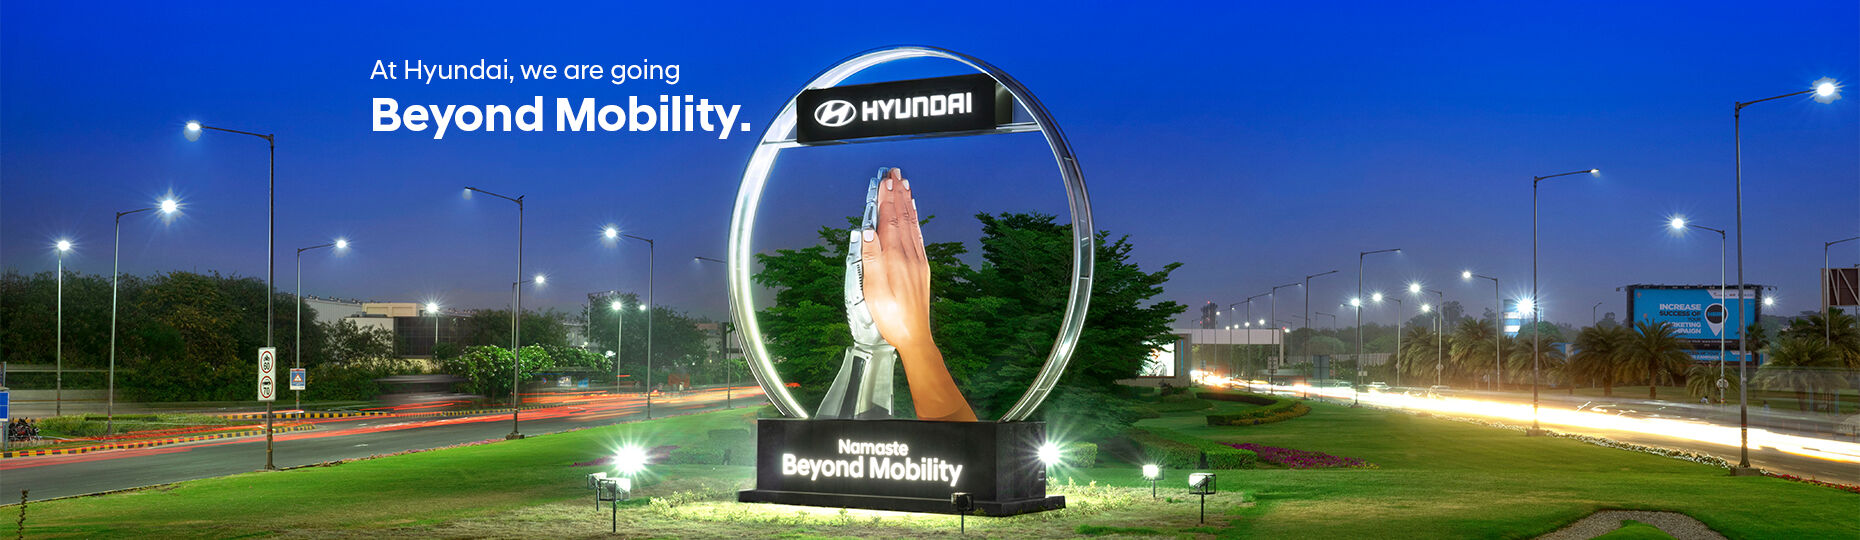 Beyond-mobility